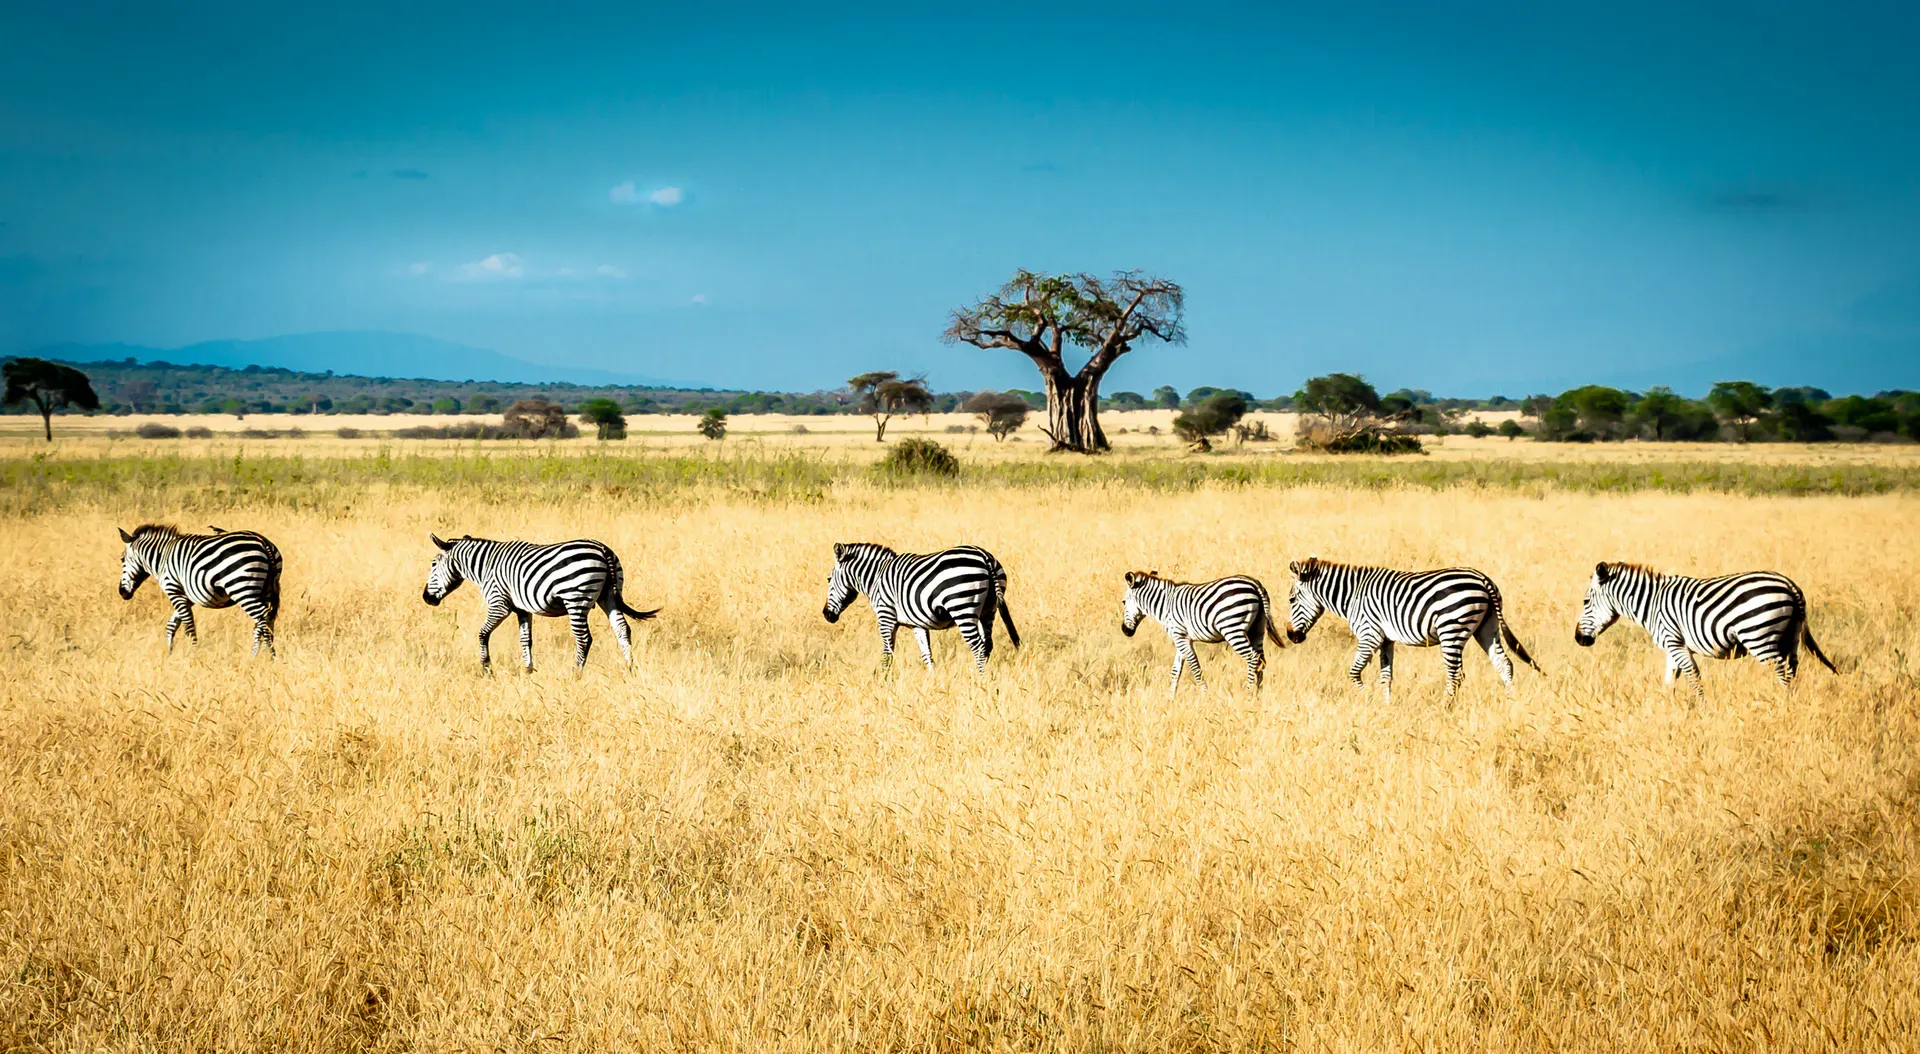 A string of zebras wandering across the Tanzanian plains.